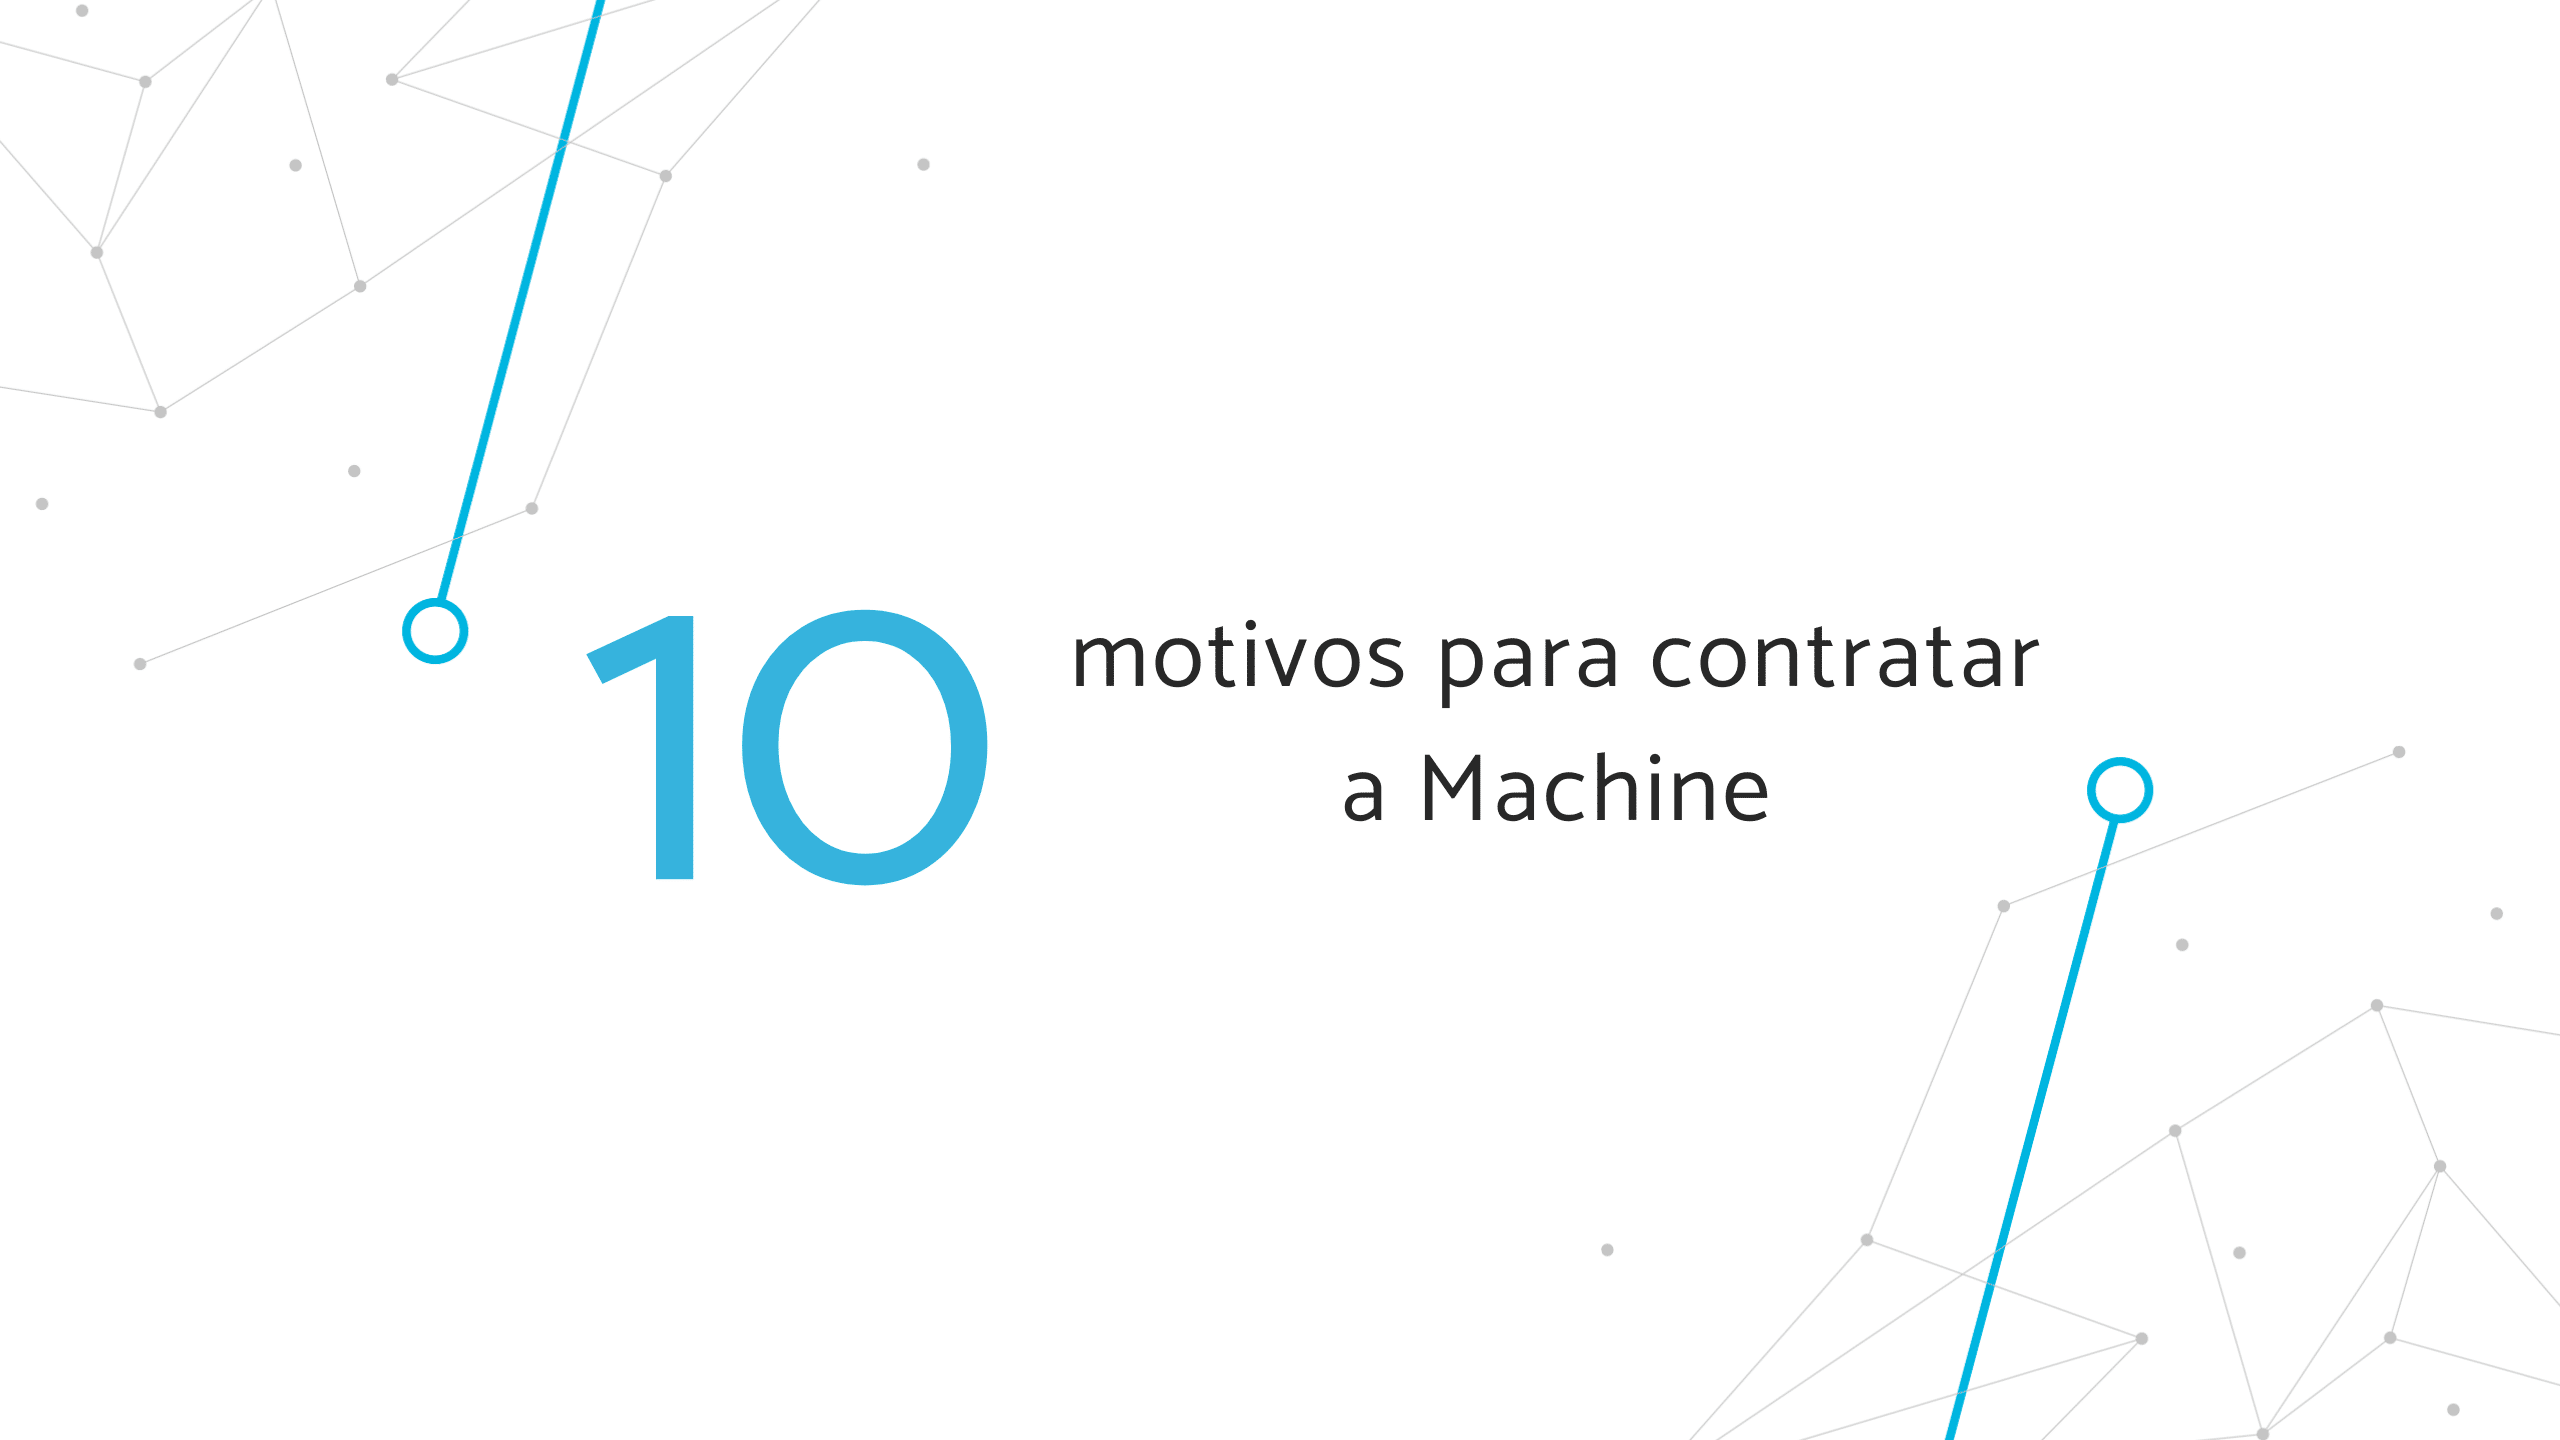 Banner "10 motivos para contratar a Machine"